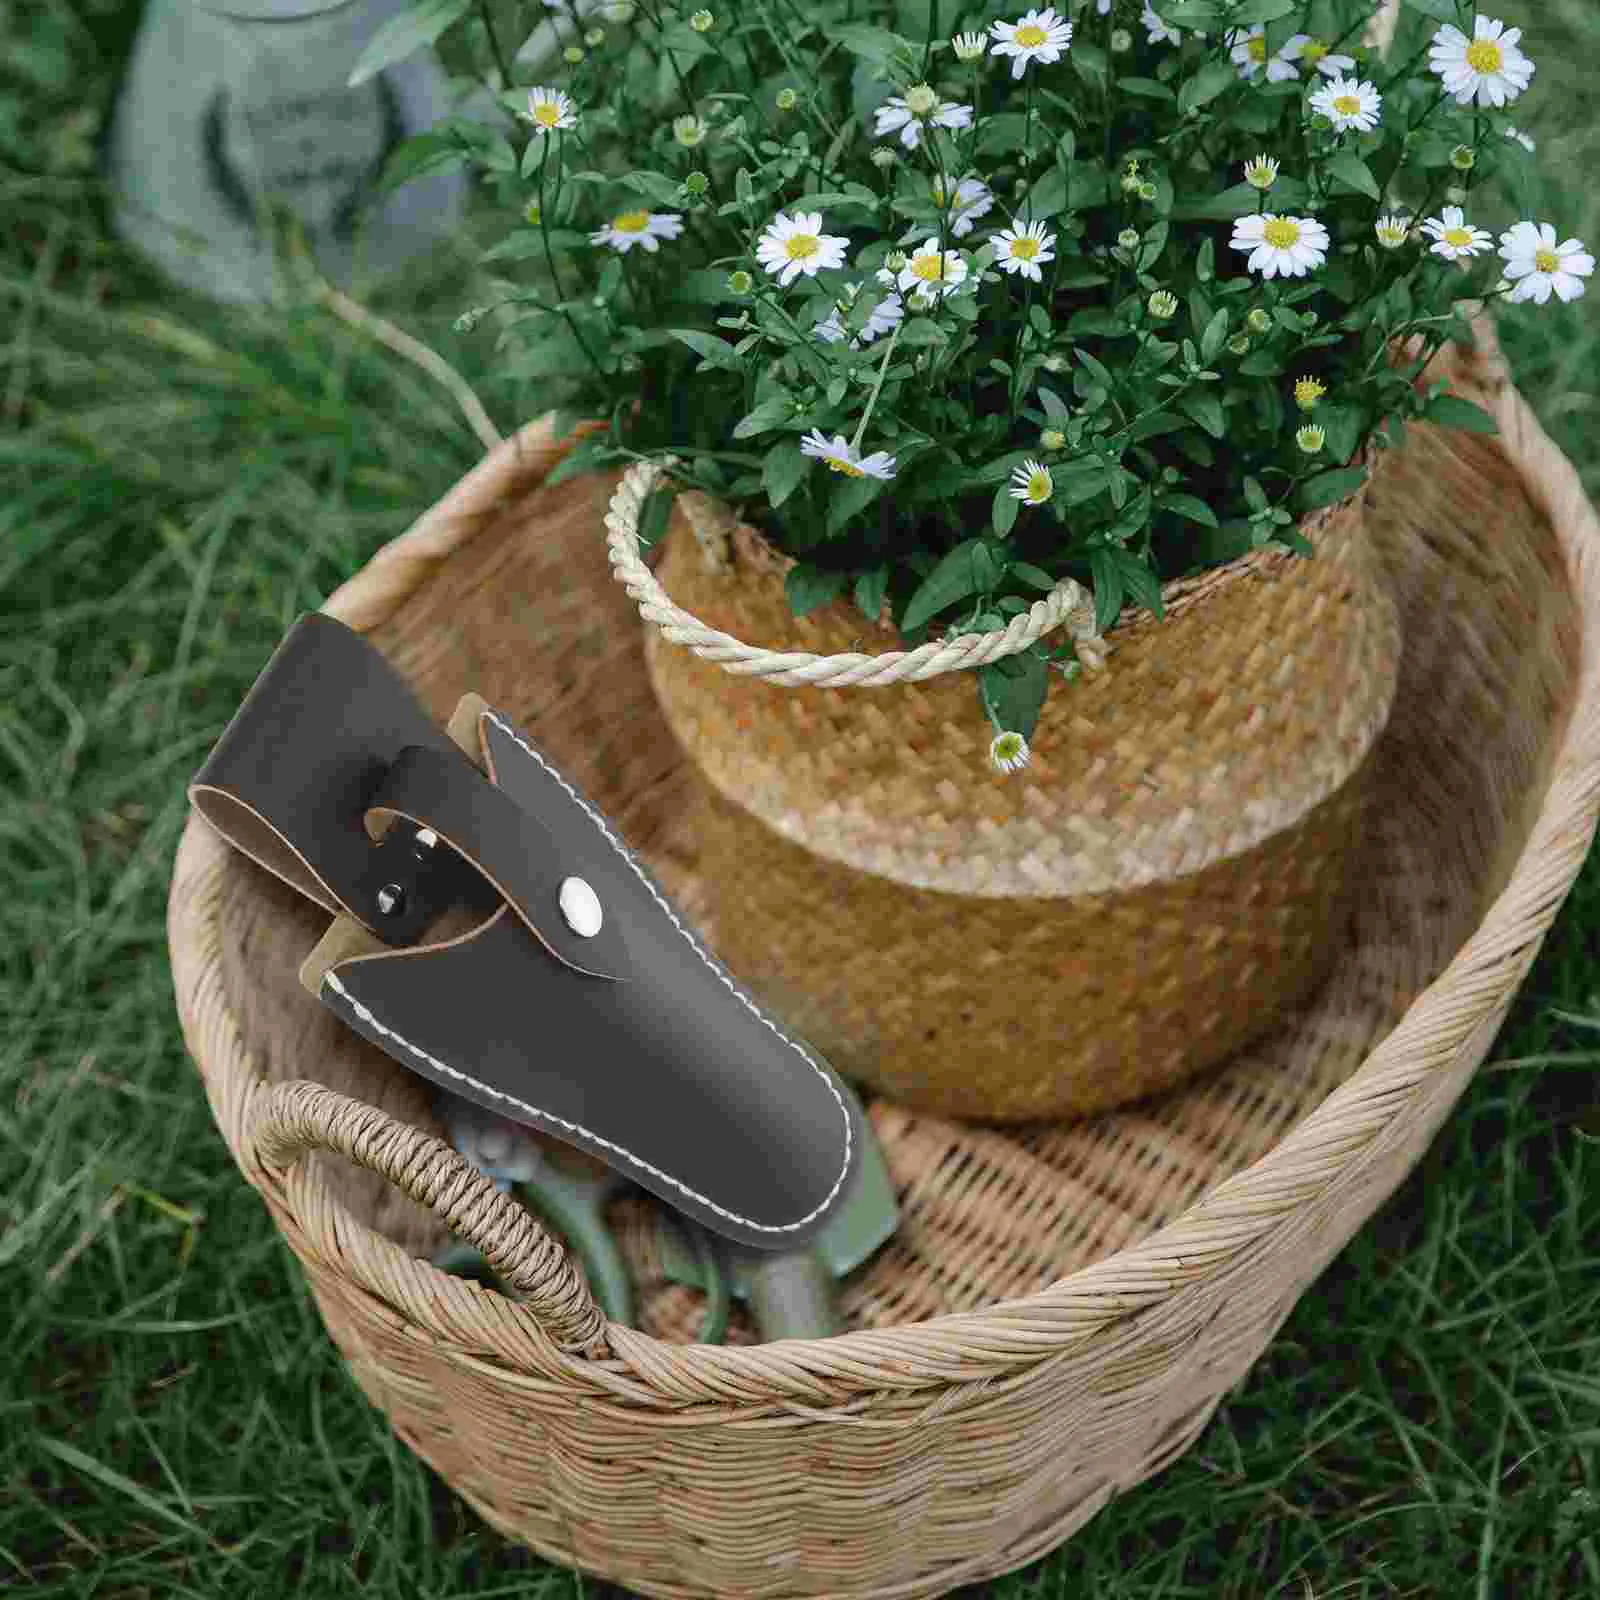 Garden Pruner Case Cover Scabbard For Gardening Pruning Shears Scissor